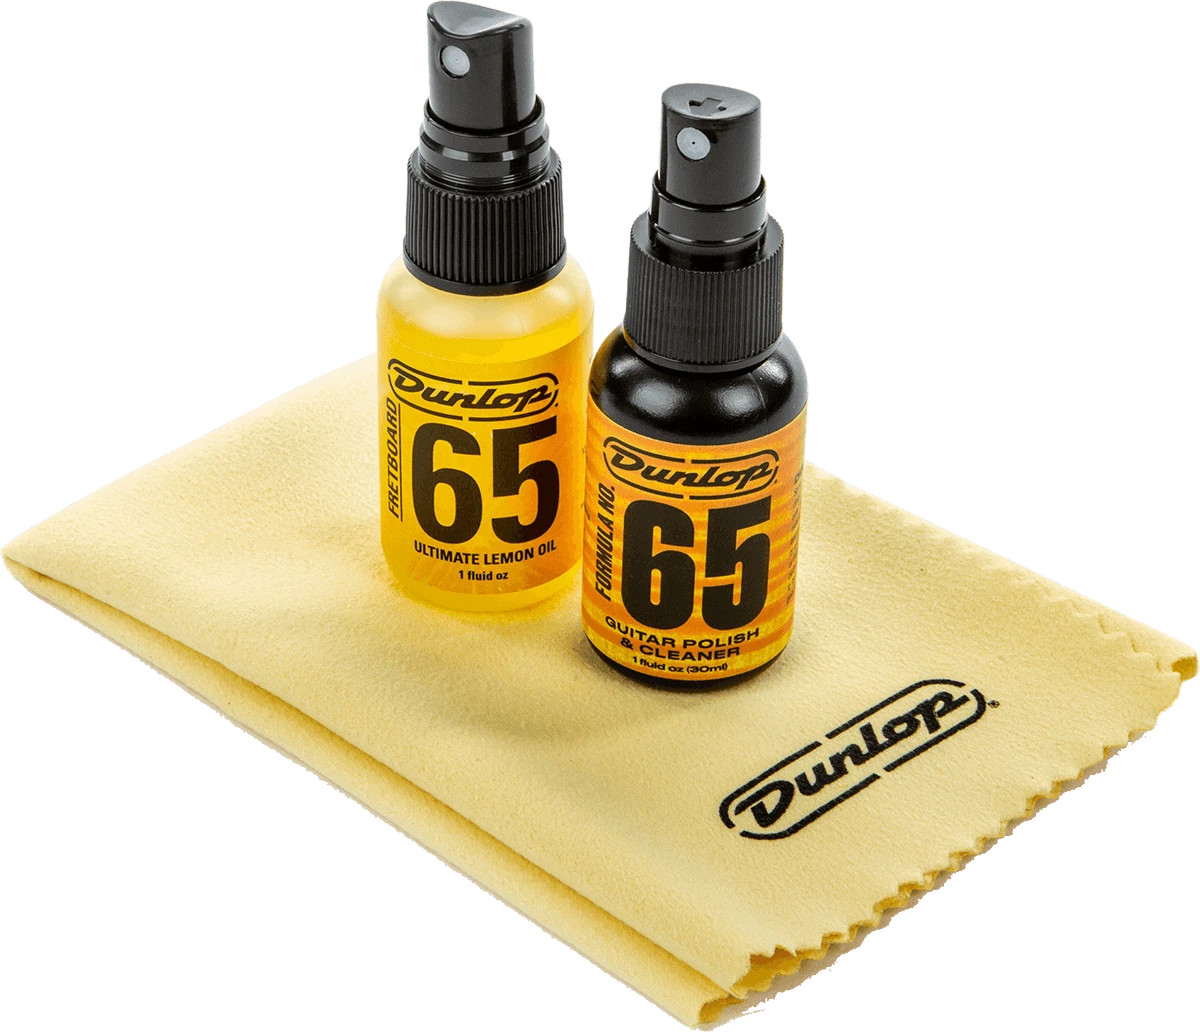 Dunlop System 65 Body & Fingerboard Kit GA59 (30ml)